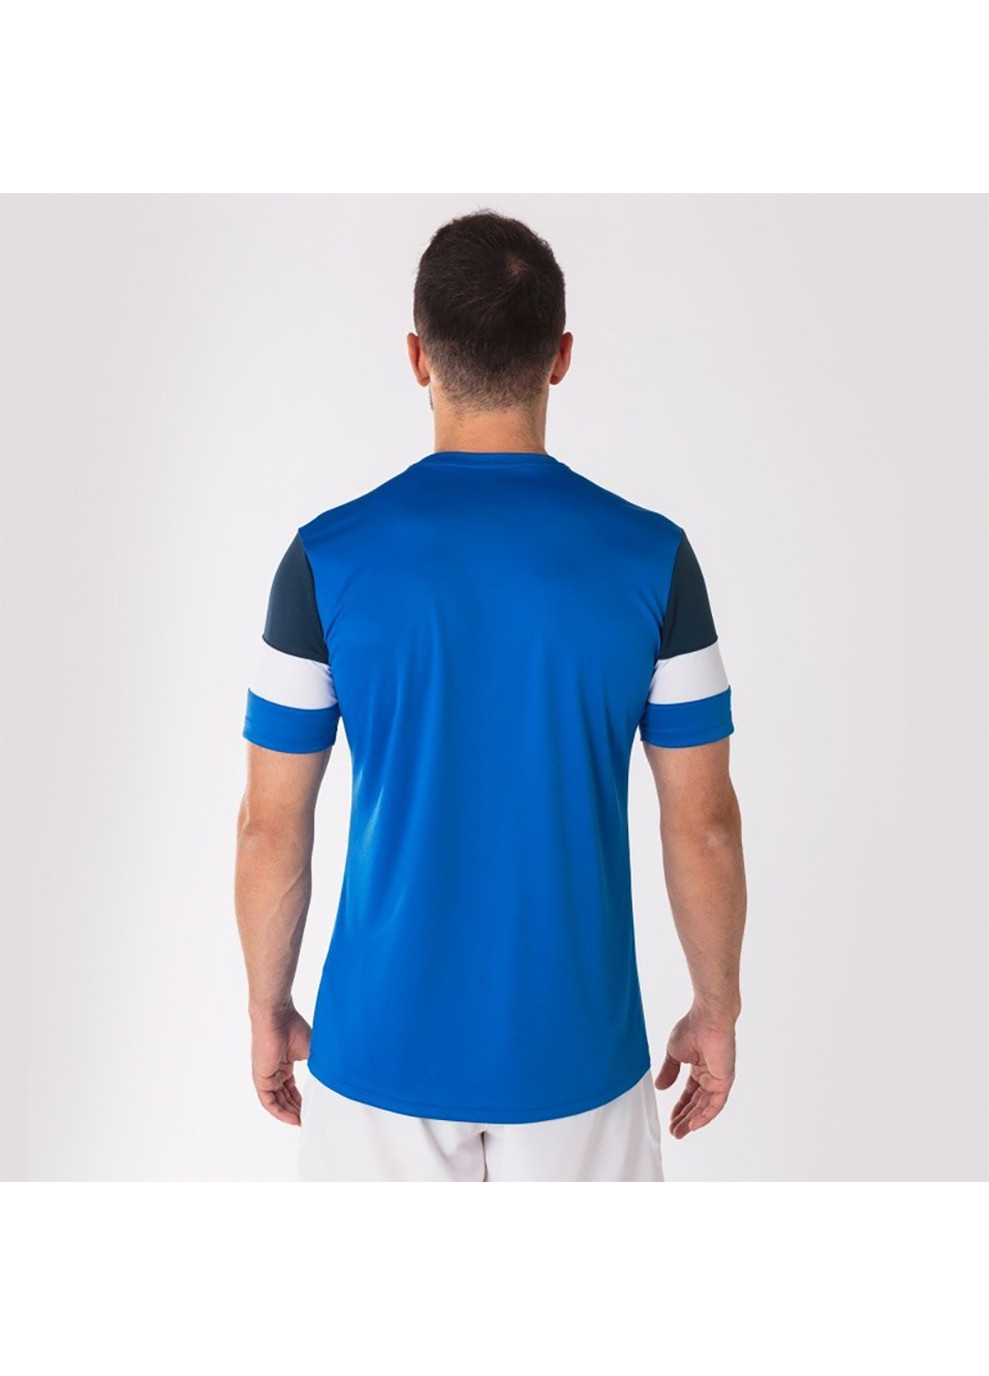 Голубая футболка crew iv t-shirt royal-dark navy s/s голубой Joma